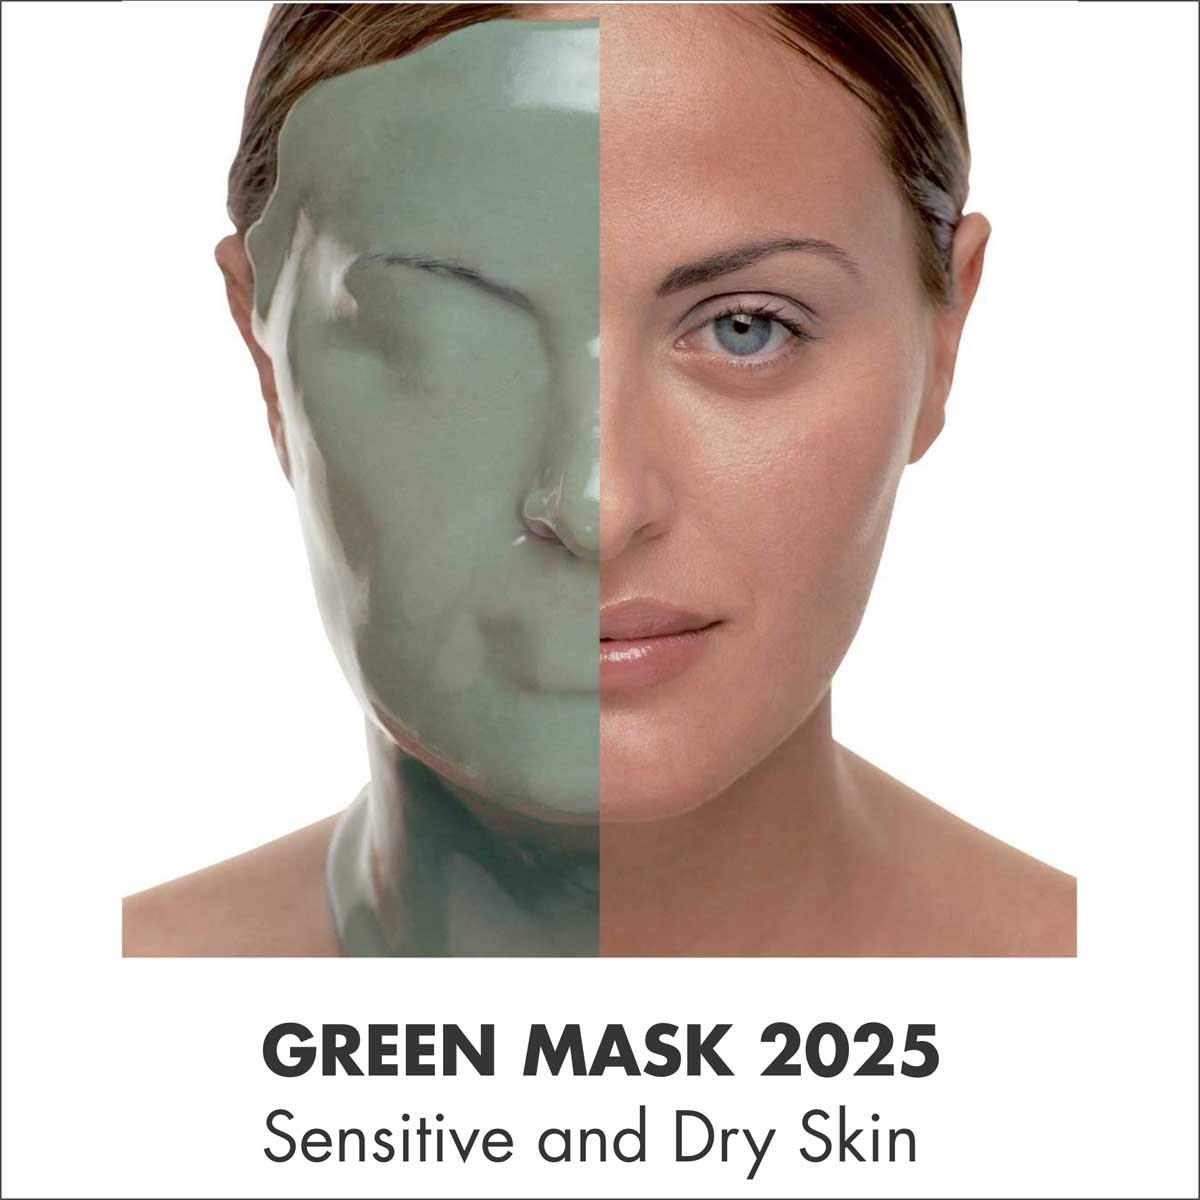 Casmara Mask For Sensitive & Dry Skin Green Mask 2025 (1gel & 1Powder) Casmara